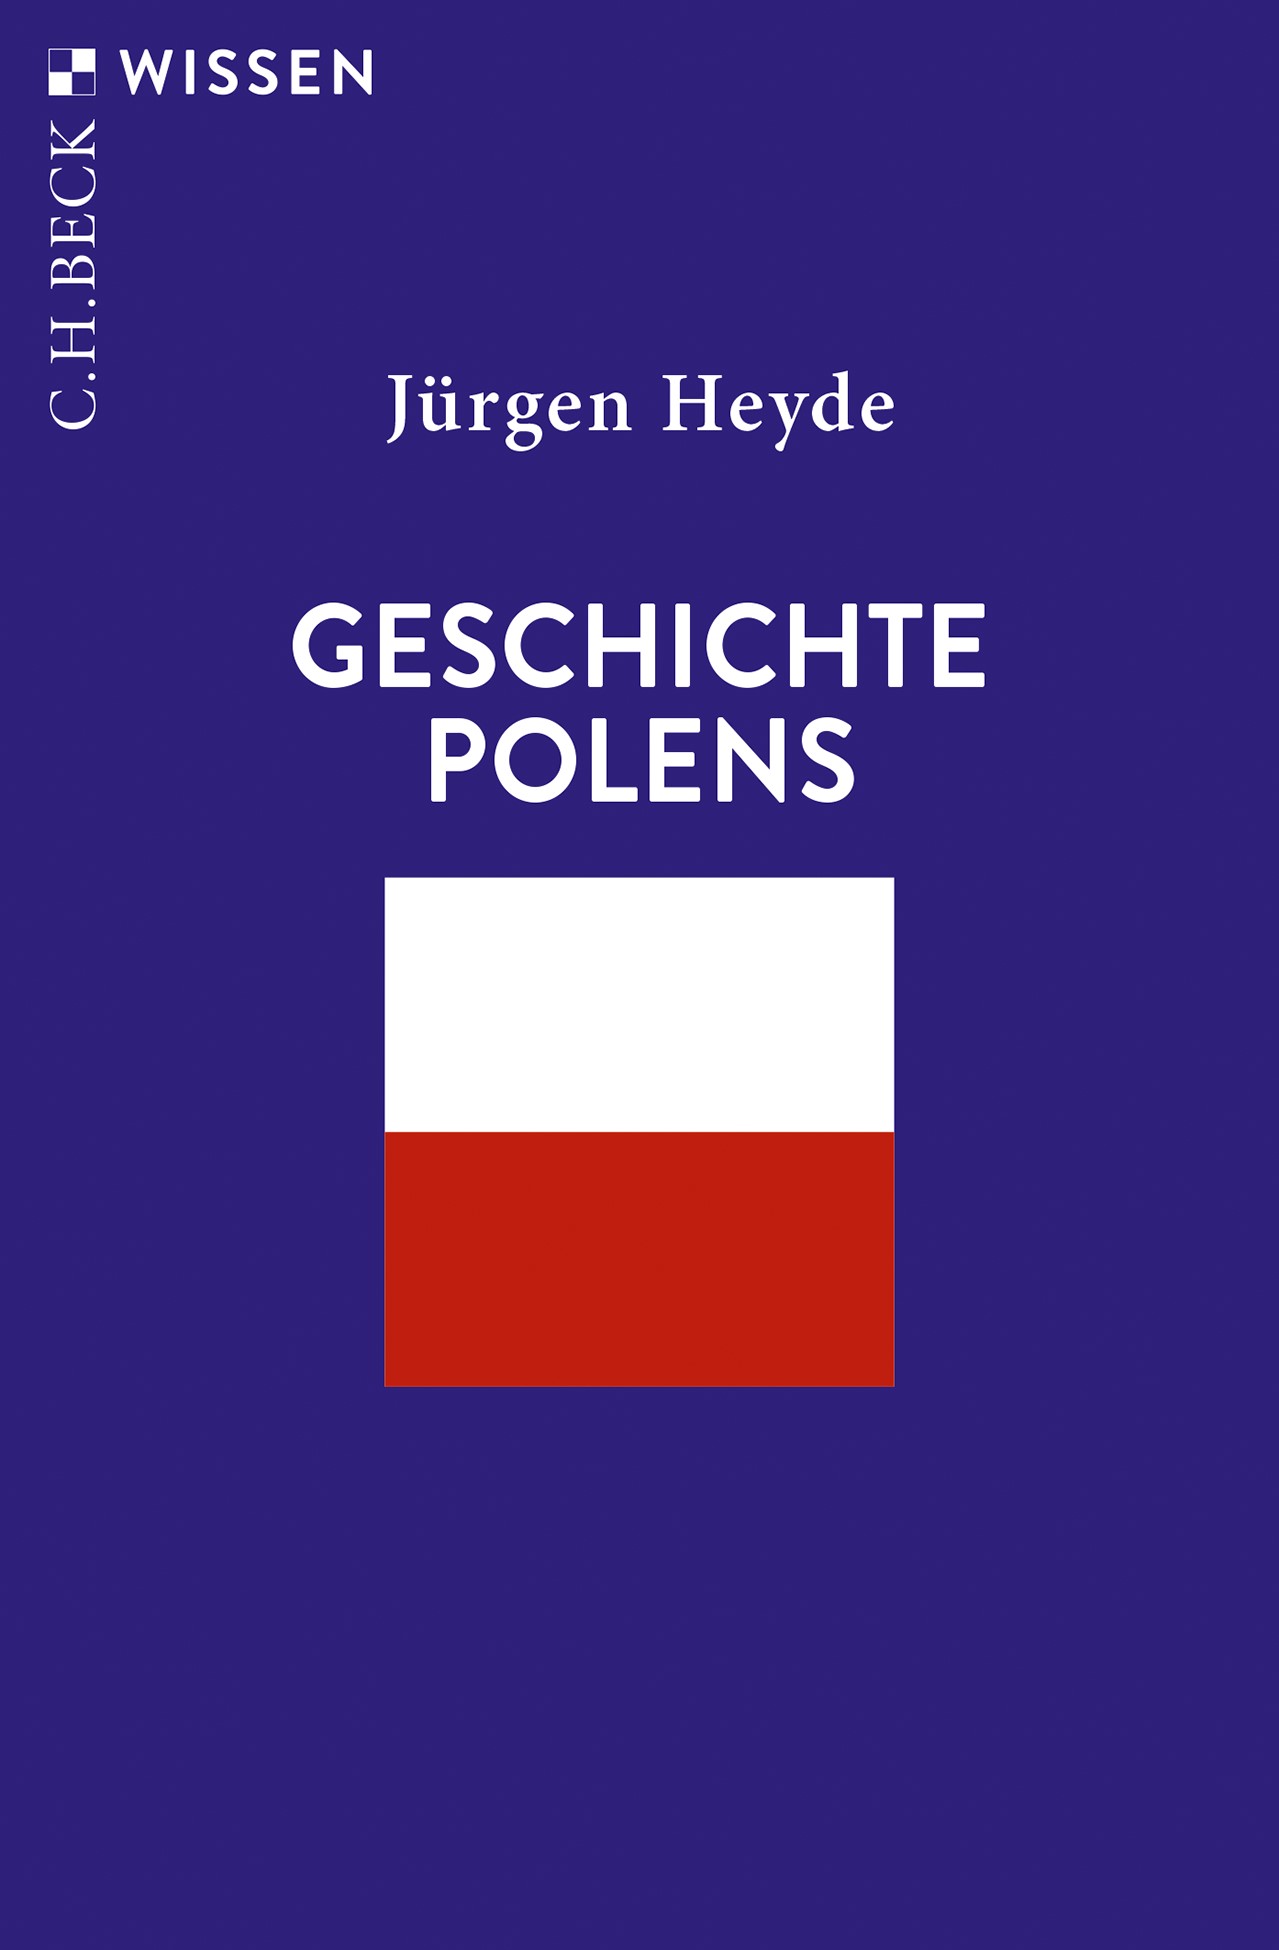 Cover: Heyde, Jürgen, Geschichte Polens